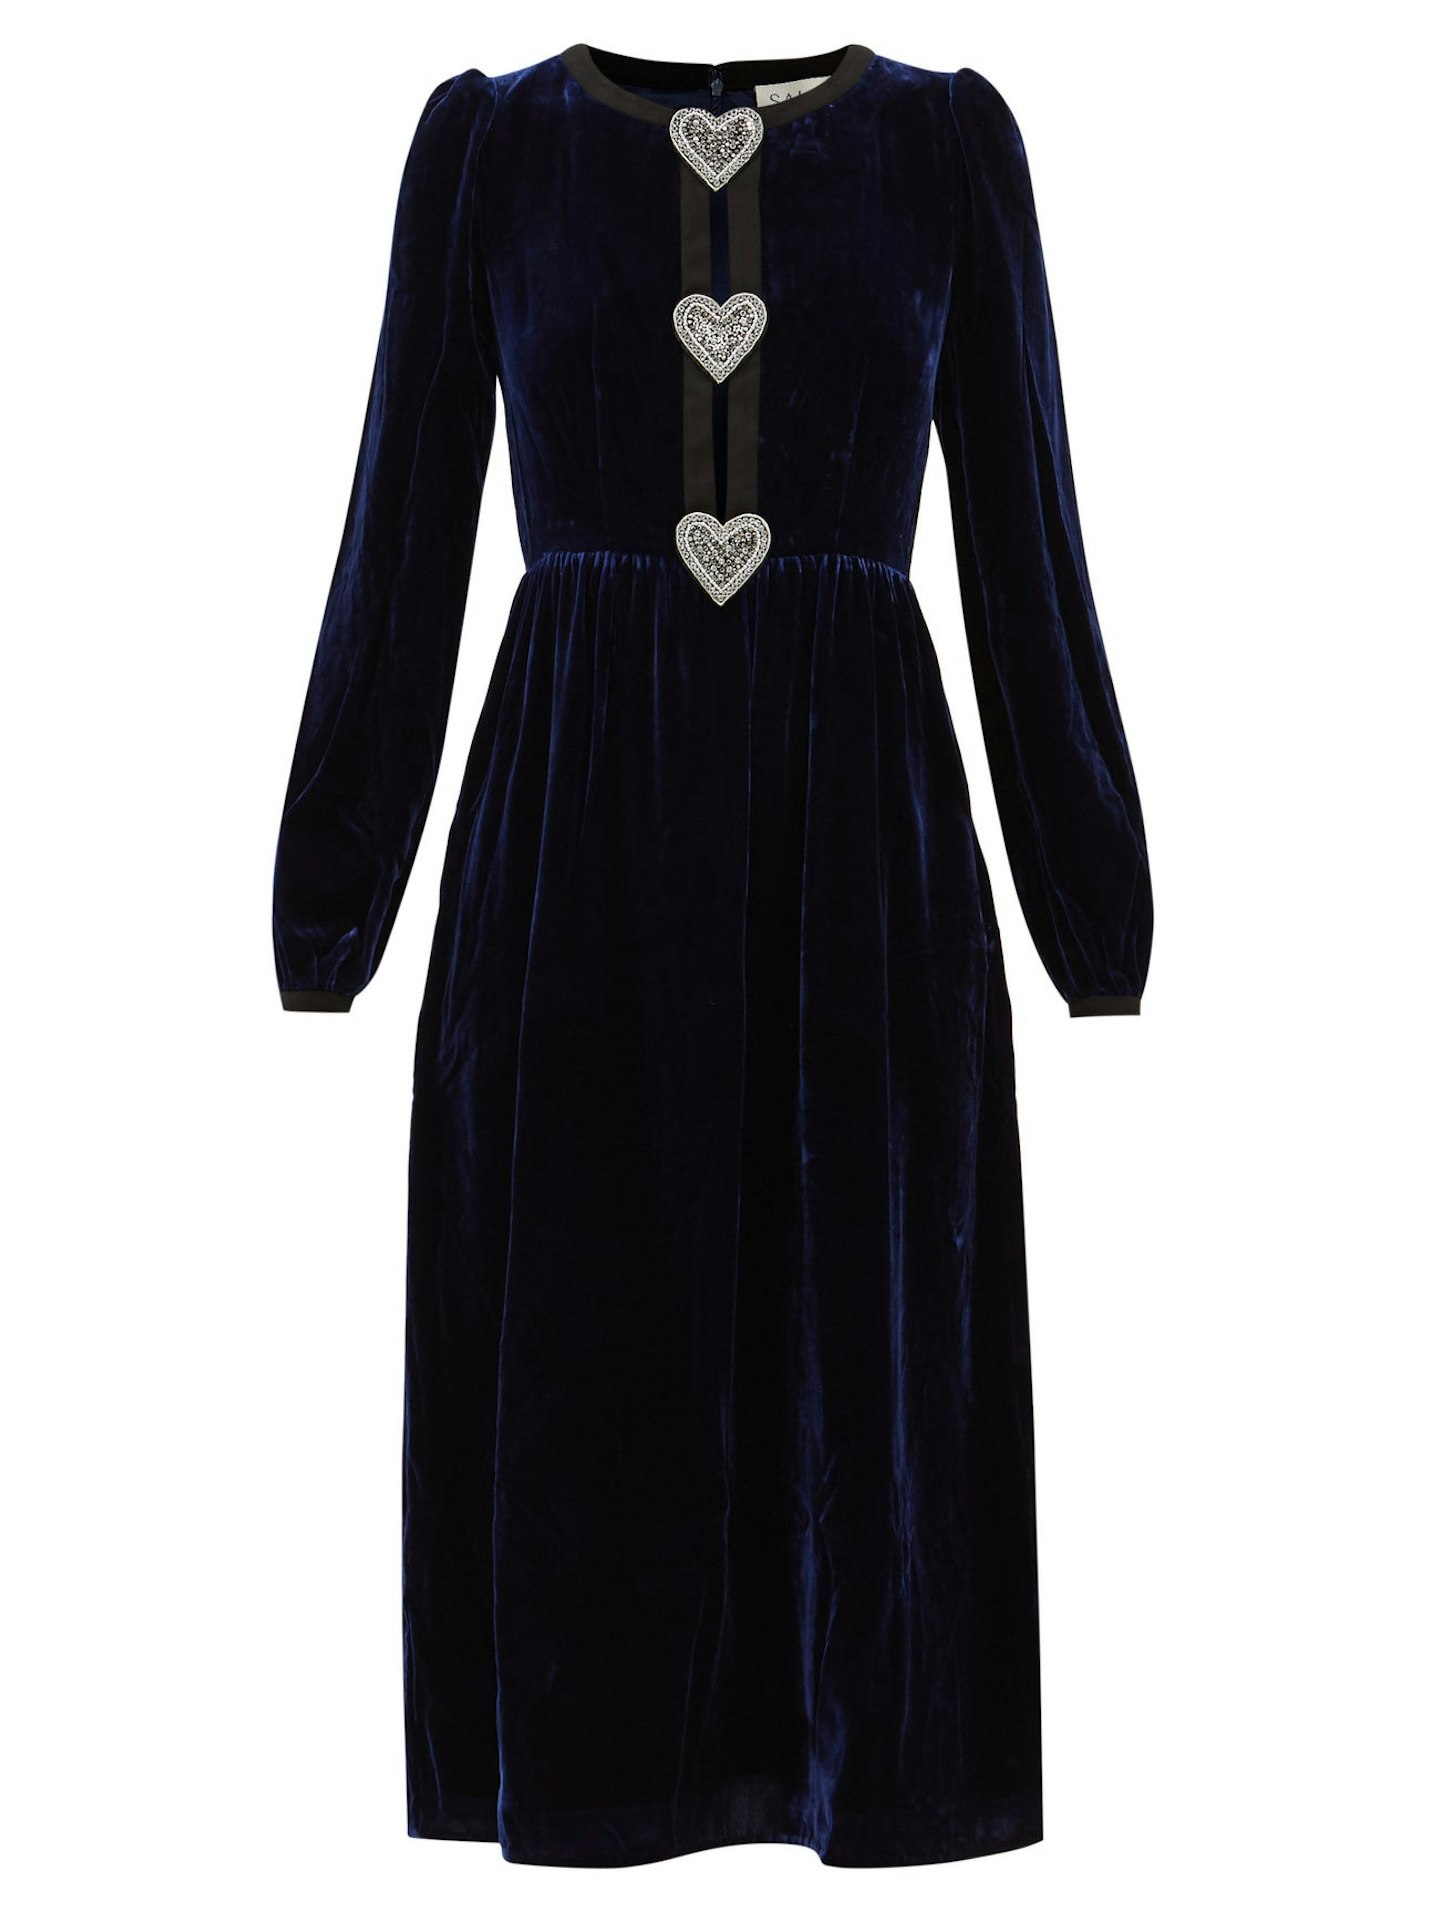 Saloni, Camille crystal-bow velvet midi dress, £695